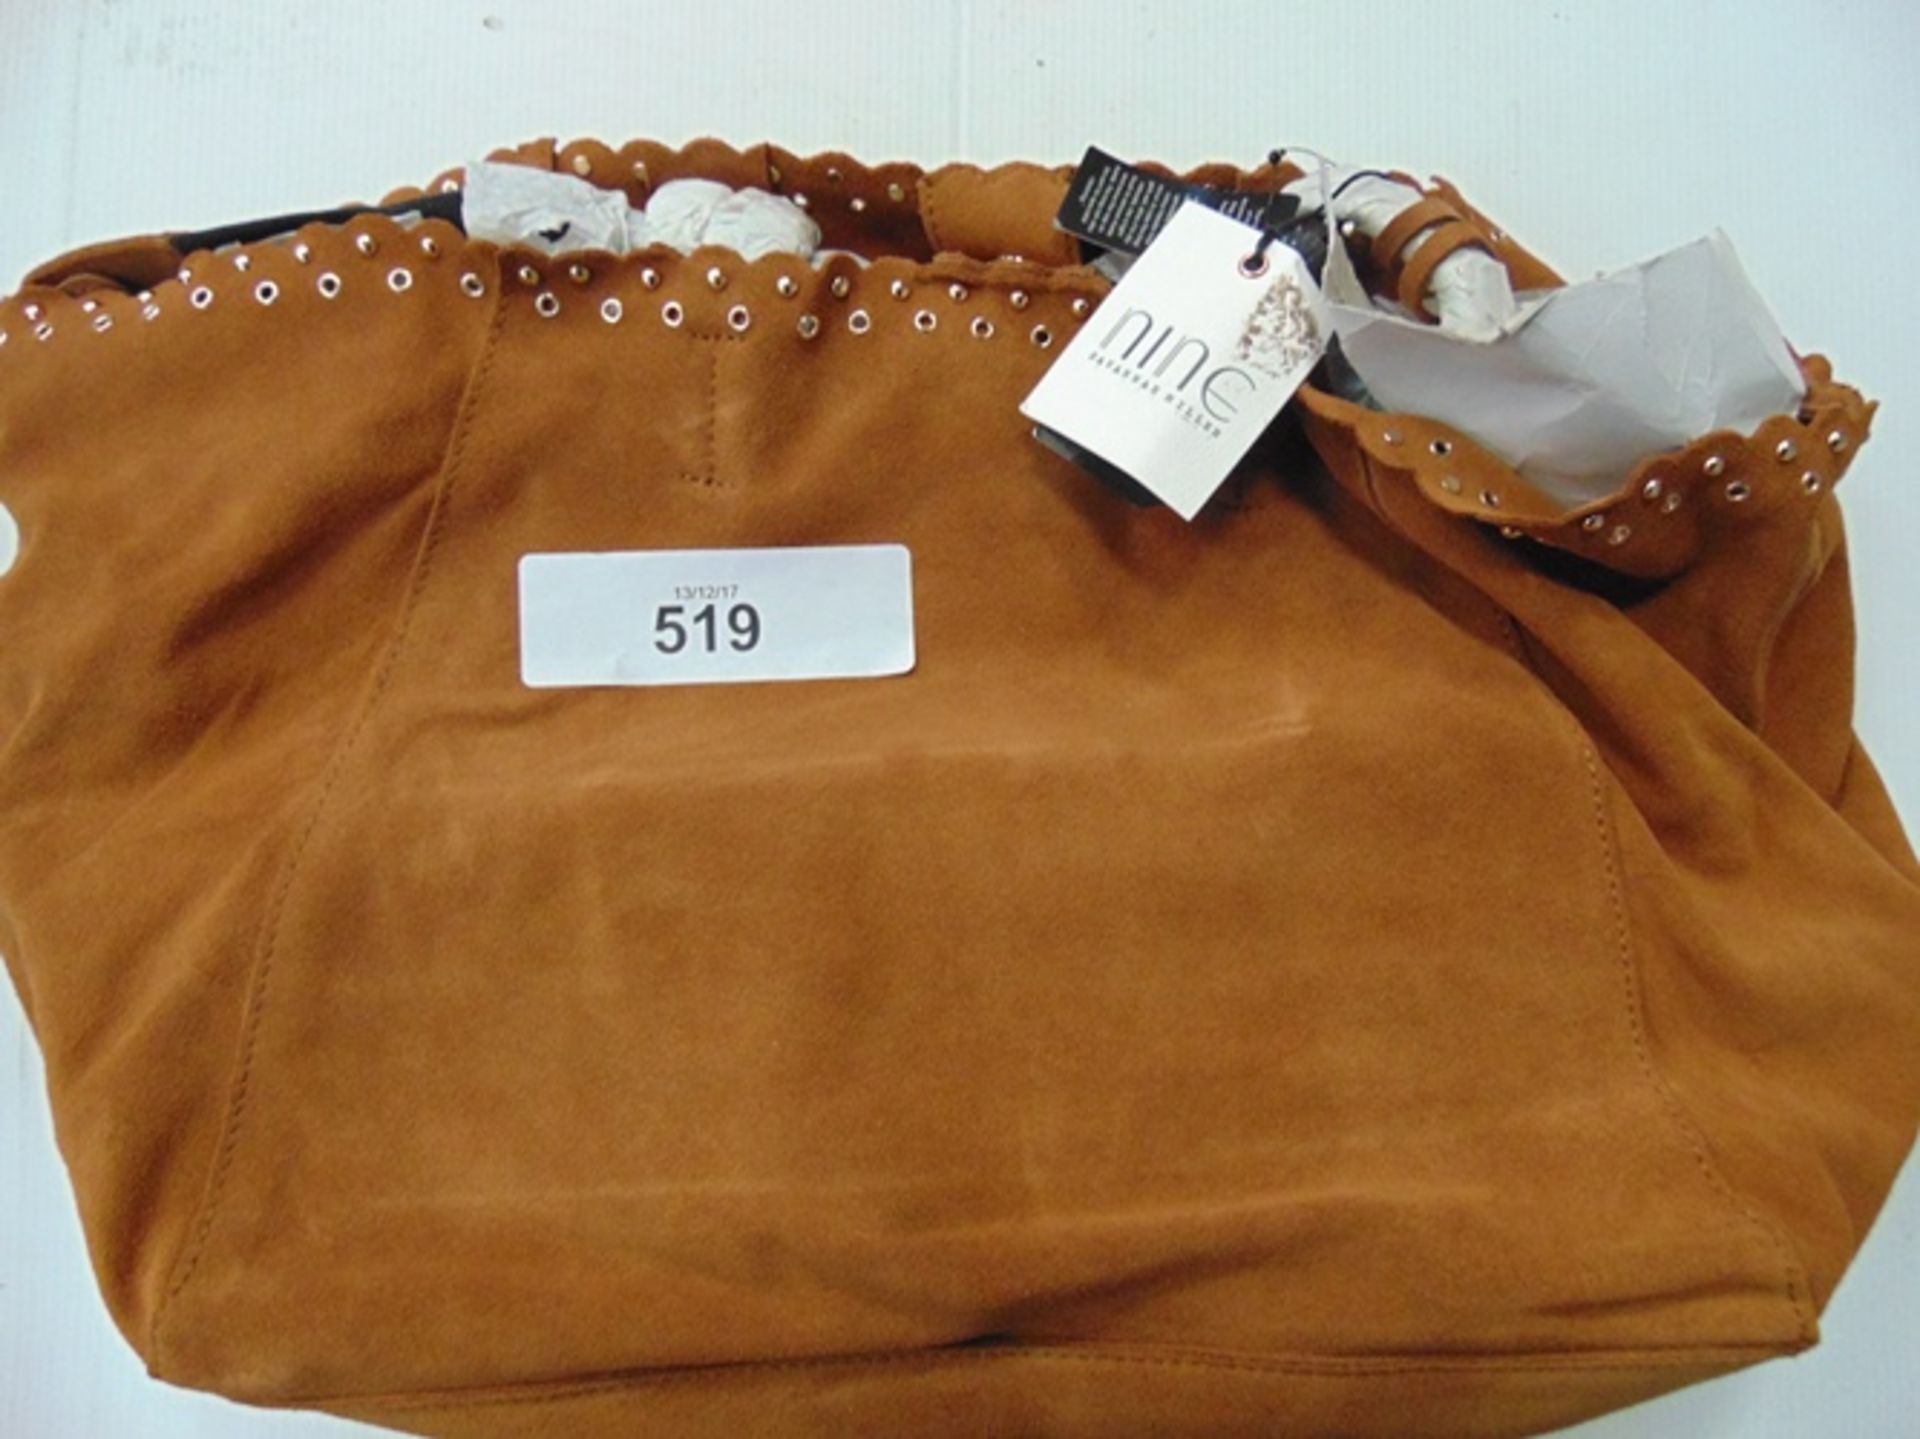 A Savannah Miller scallop stud tan hand bag, RRP £85 - New